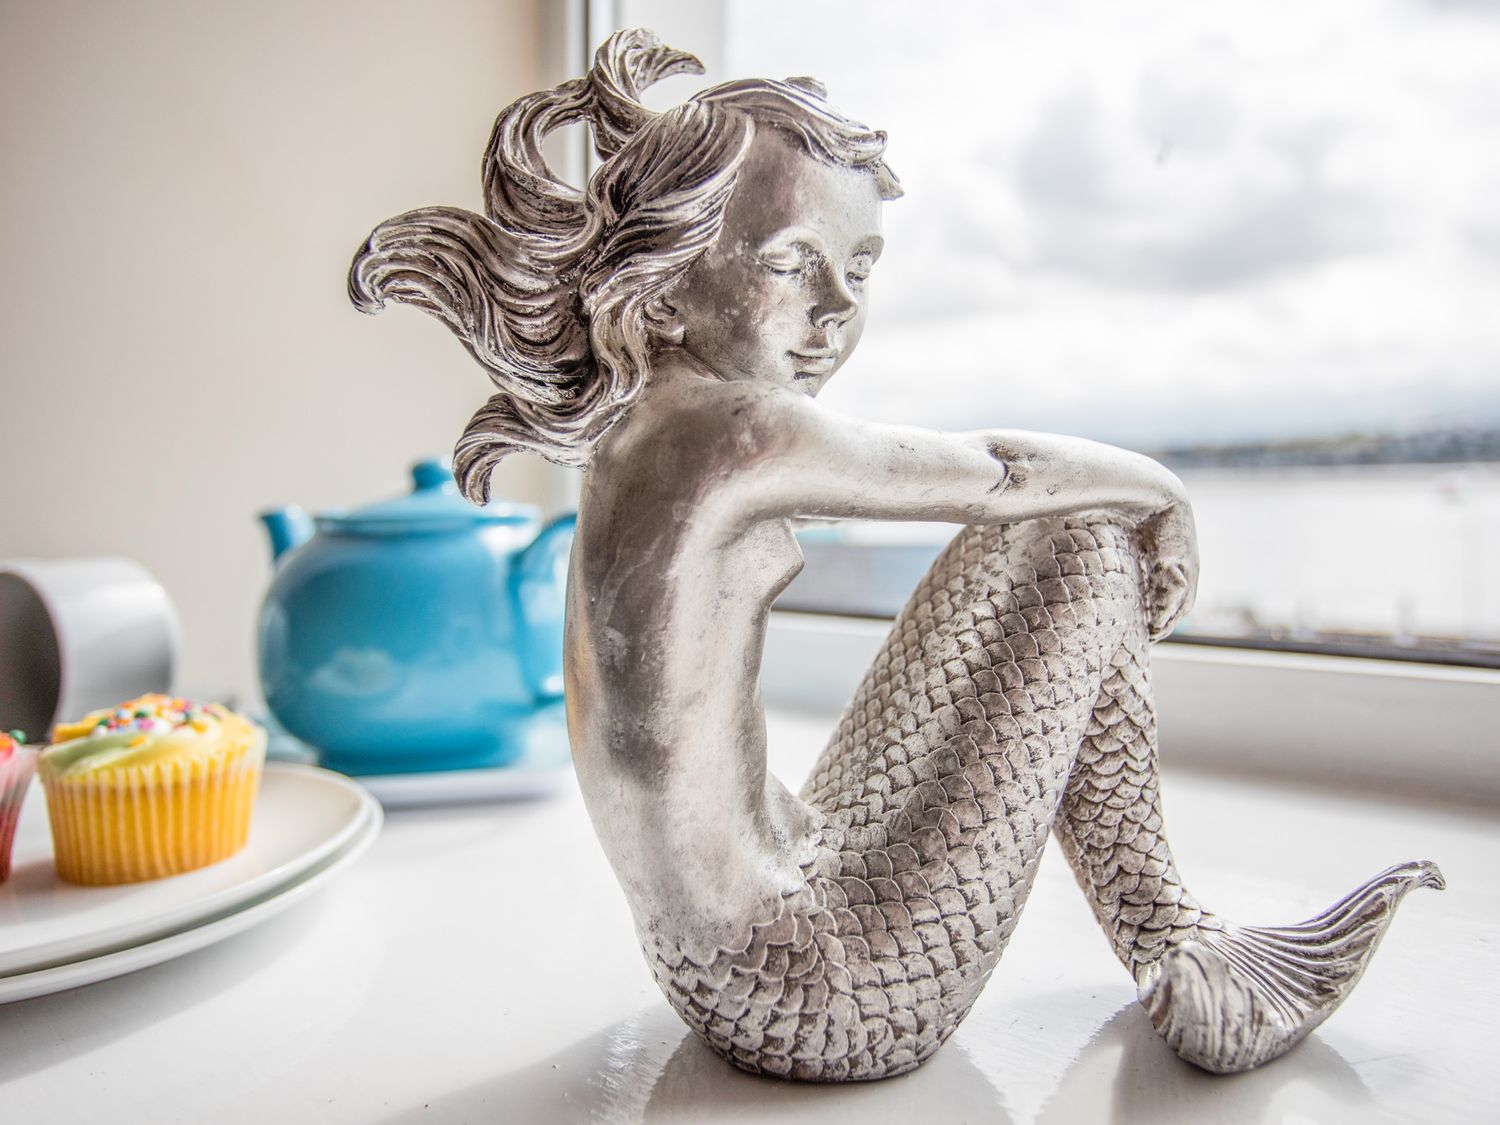 The Mermaid, Brynsiencyn